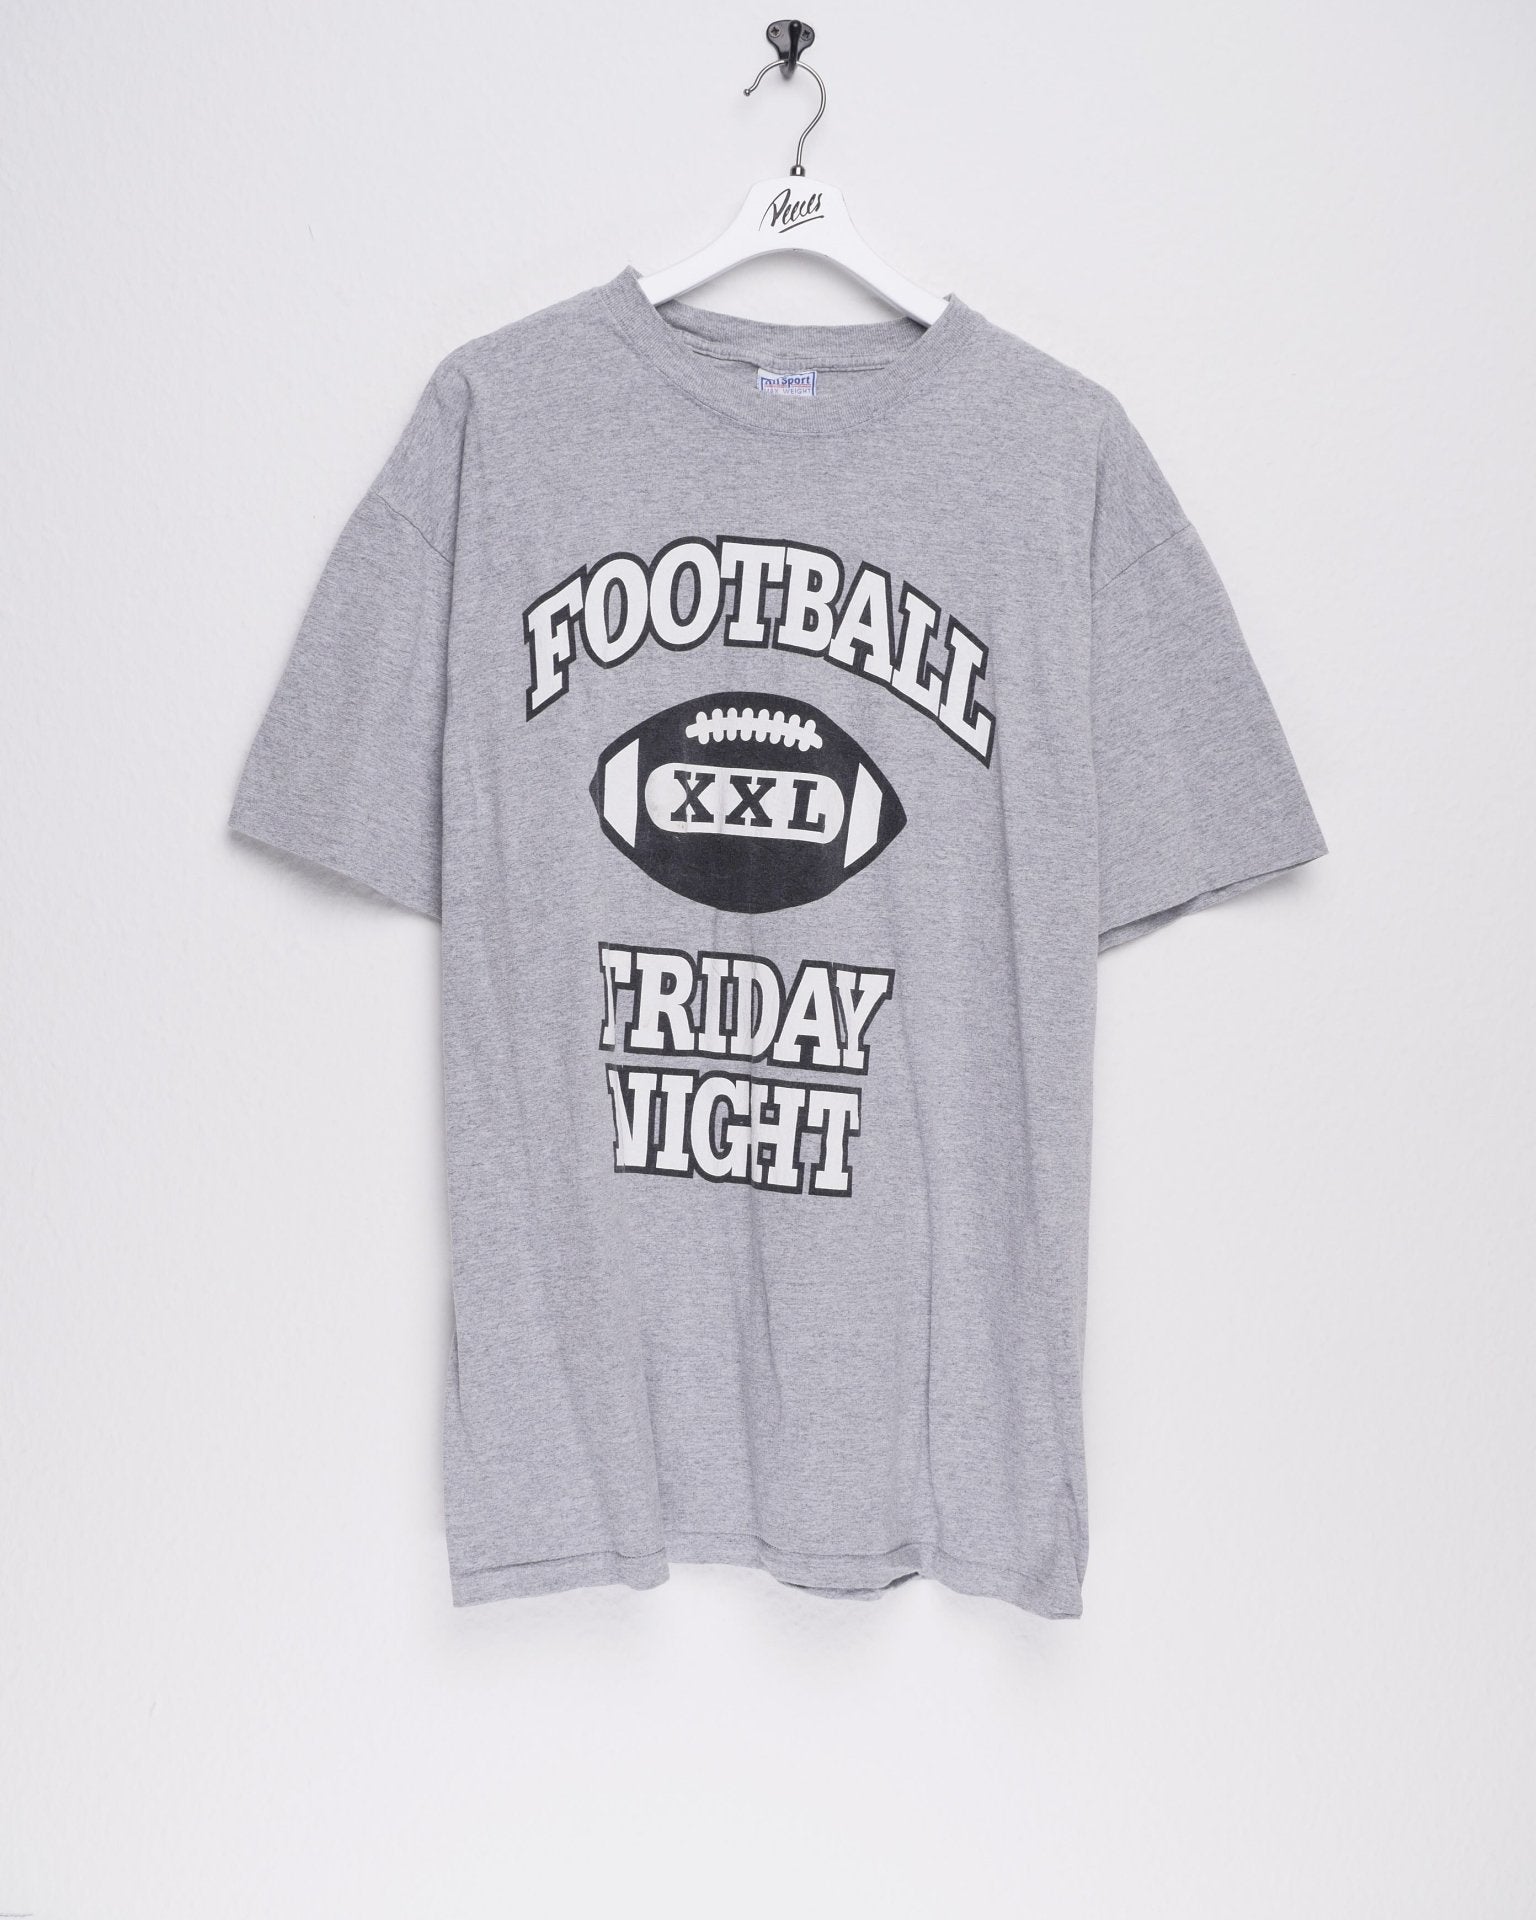 Sport Football Friday Night printed Logo Shirt - Peeces